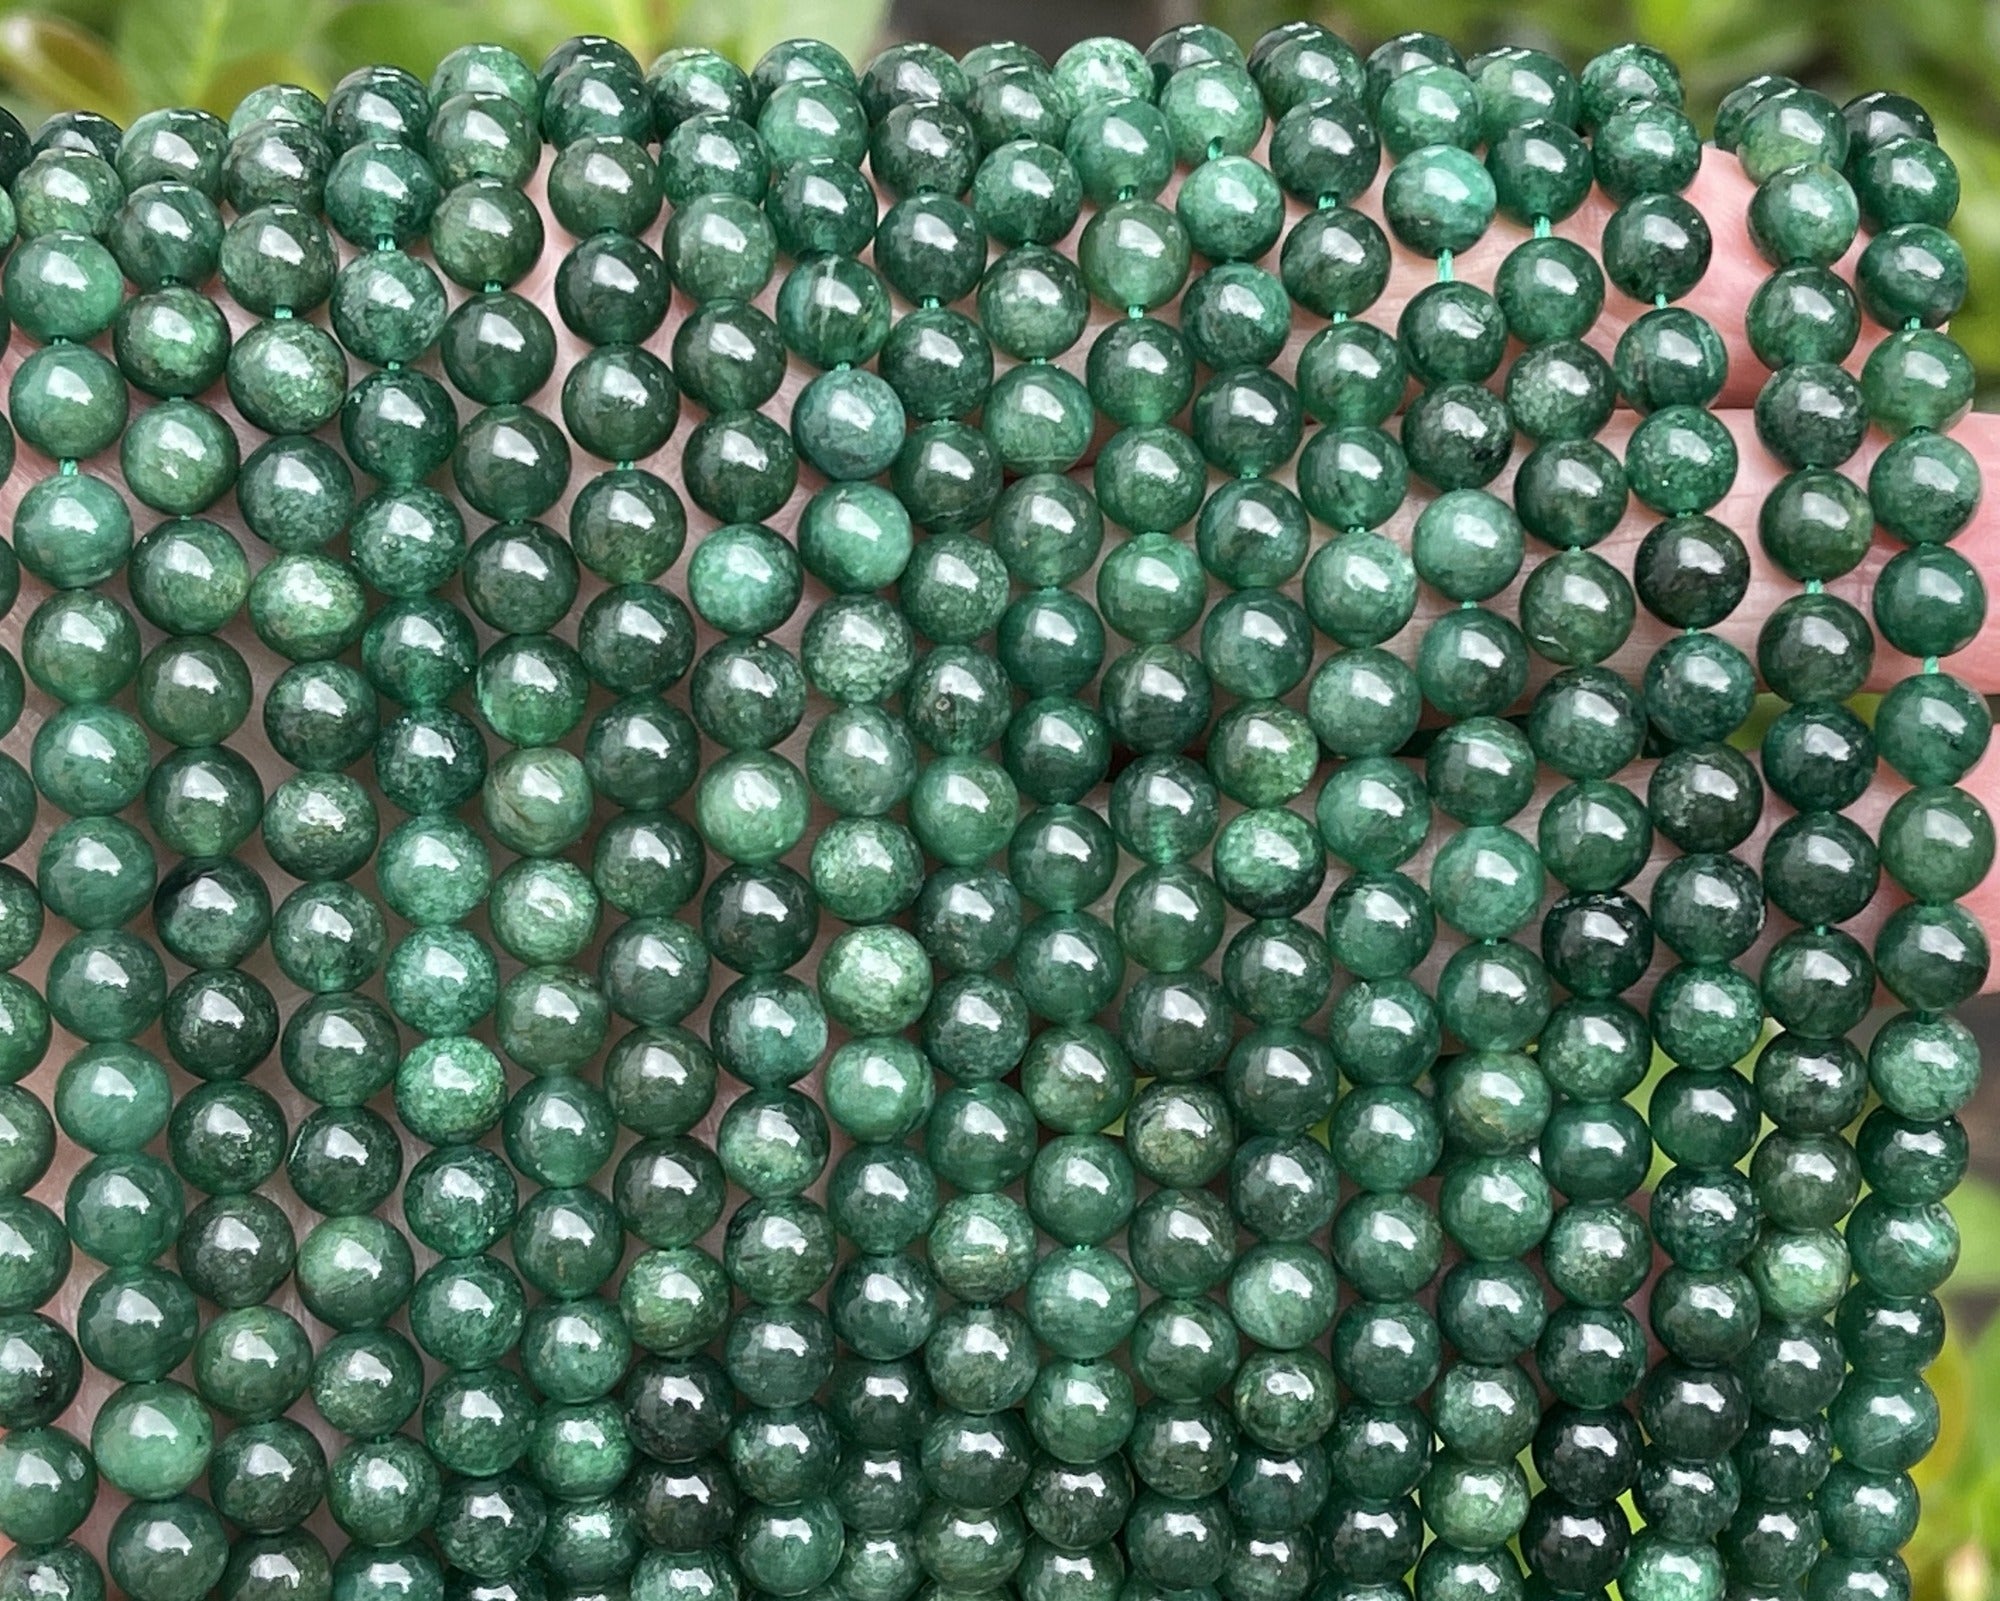 Green Mica Muscovite 6mm round natural gemstone beads 15.5" strand